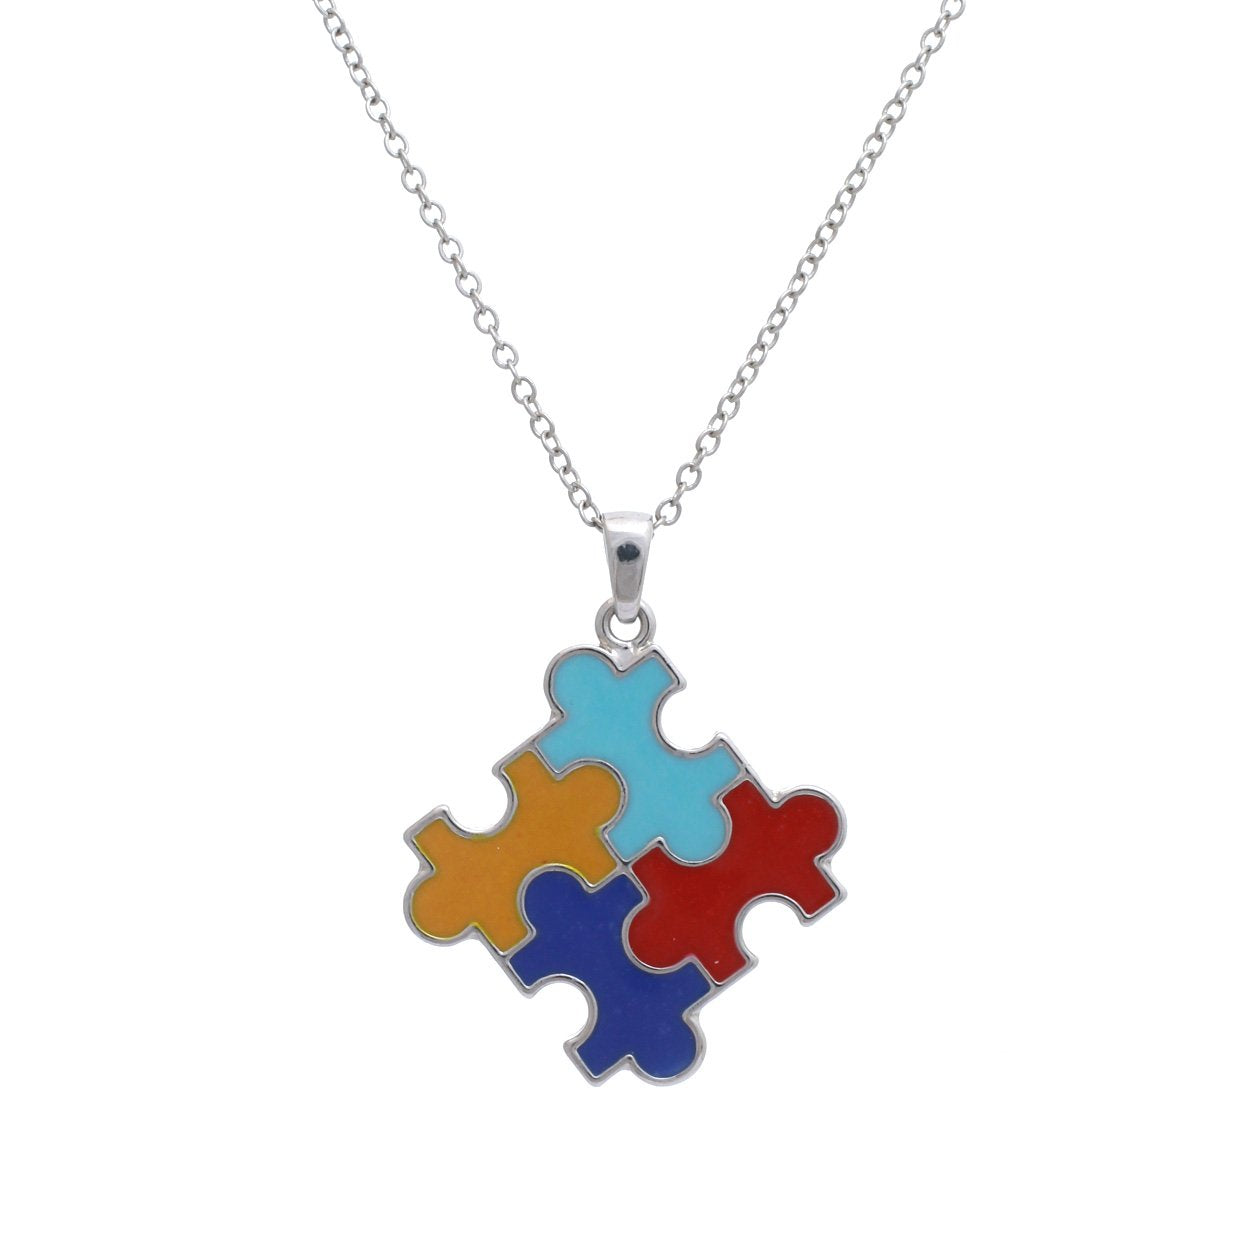 Colorful Enamel Autism Awareness Puzzle Piece Pendant Necklace, 16"-19" with 3" Extender